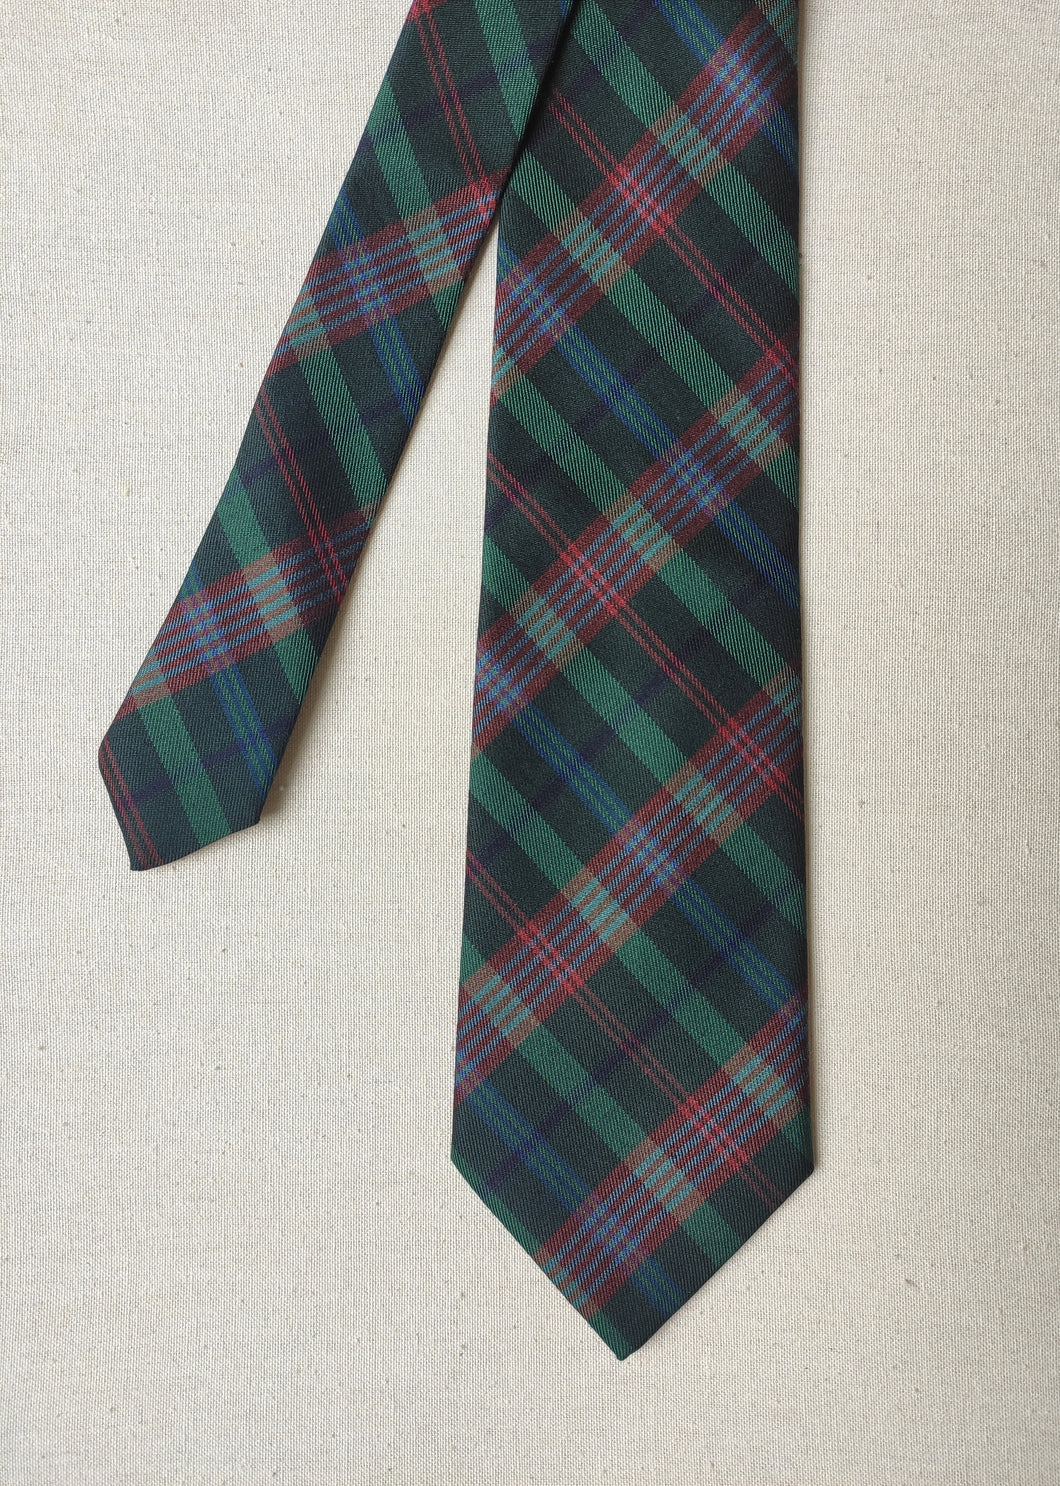 Dunhill cravate tartan en laine et soie Made in England